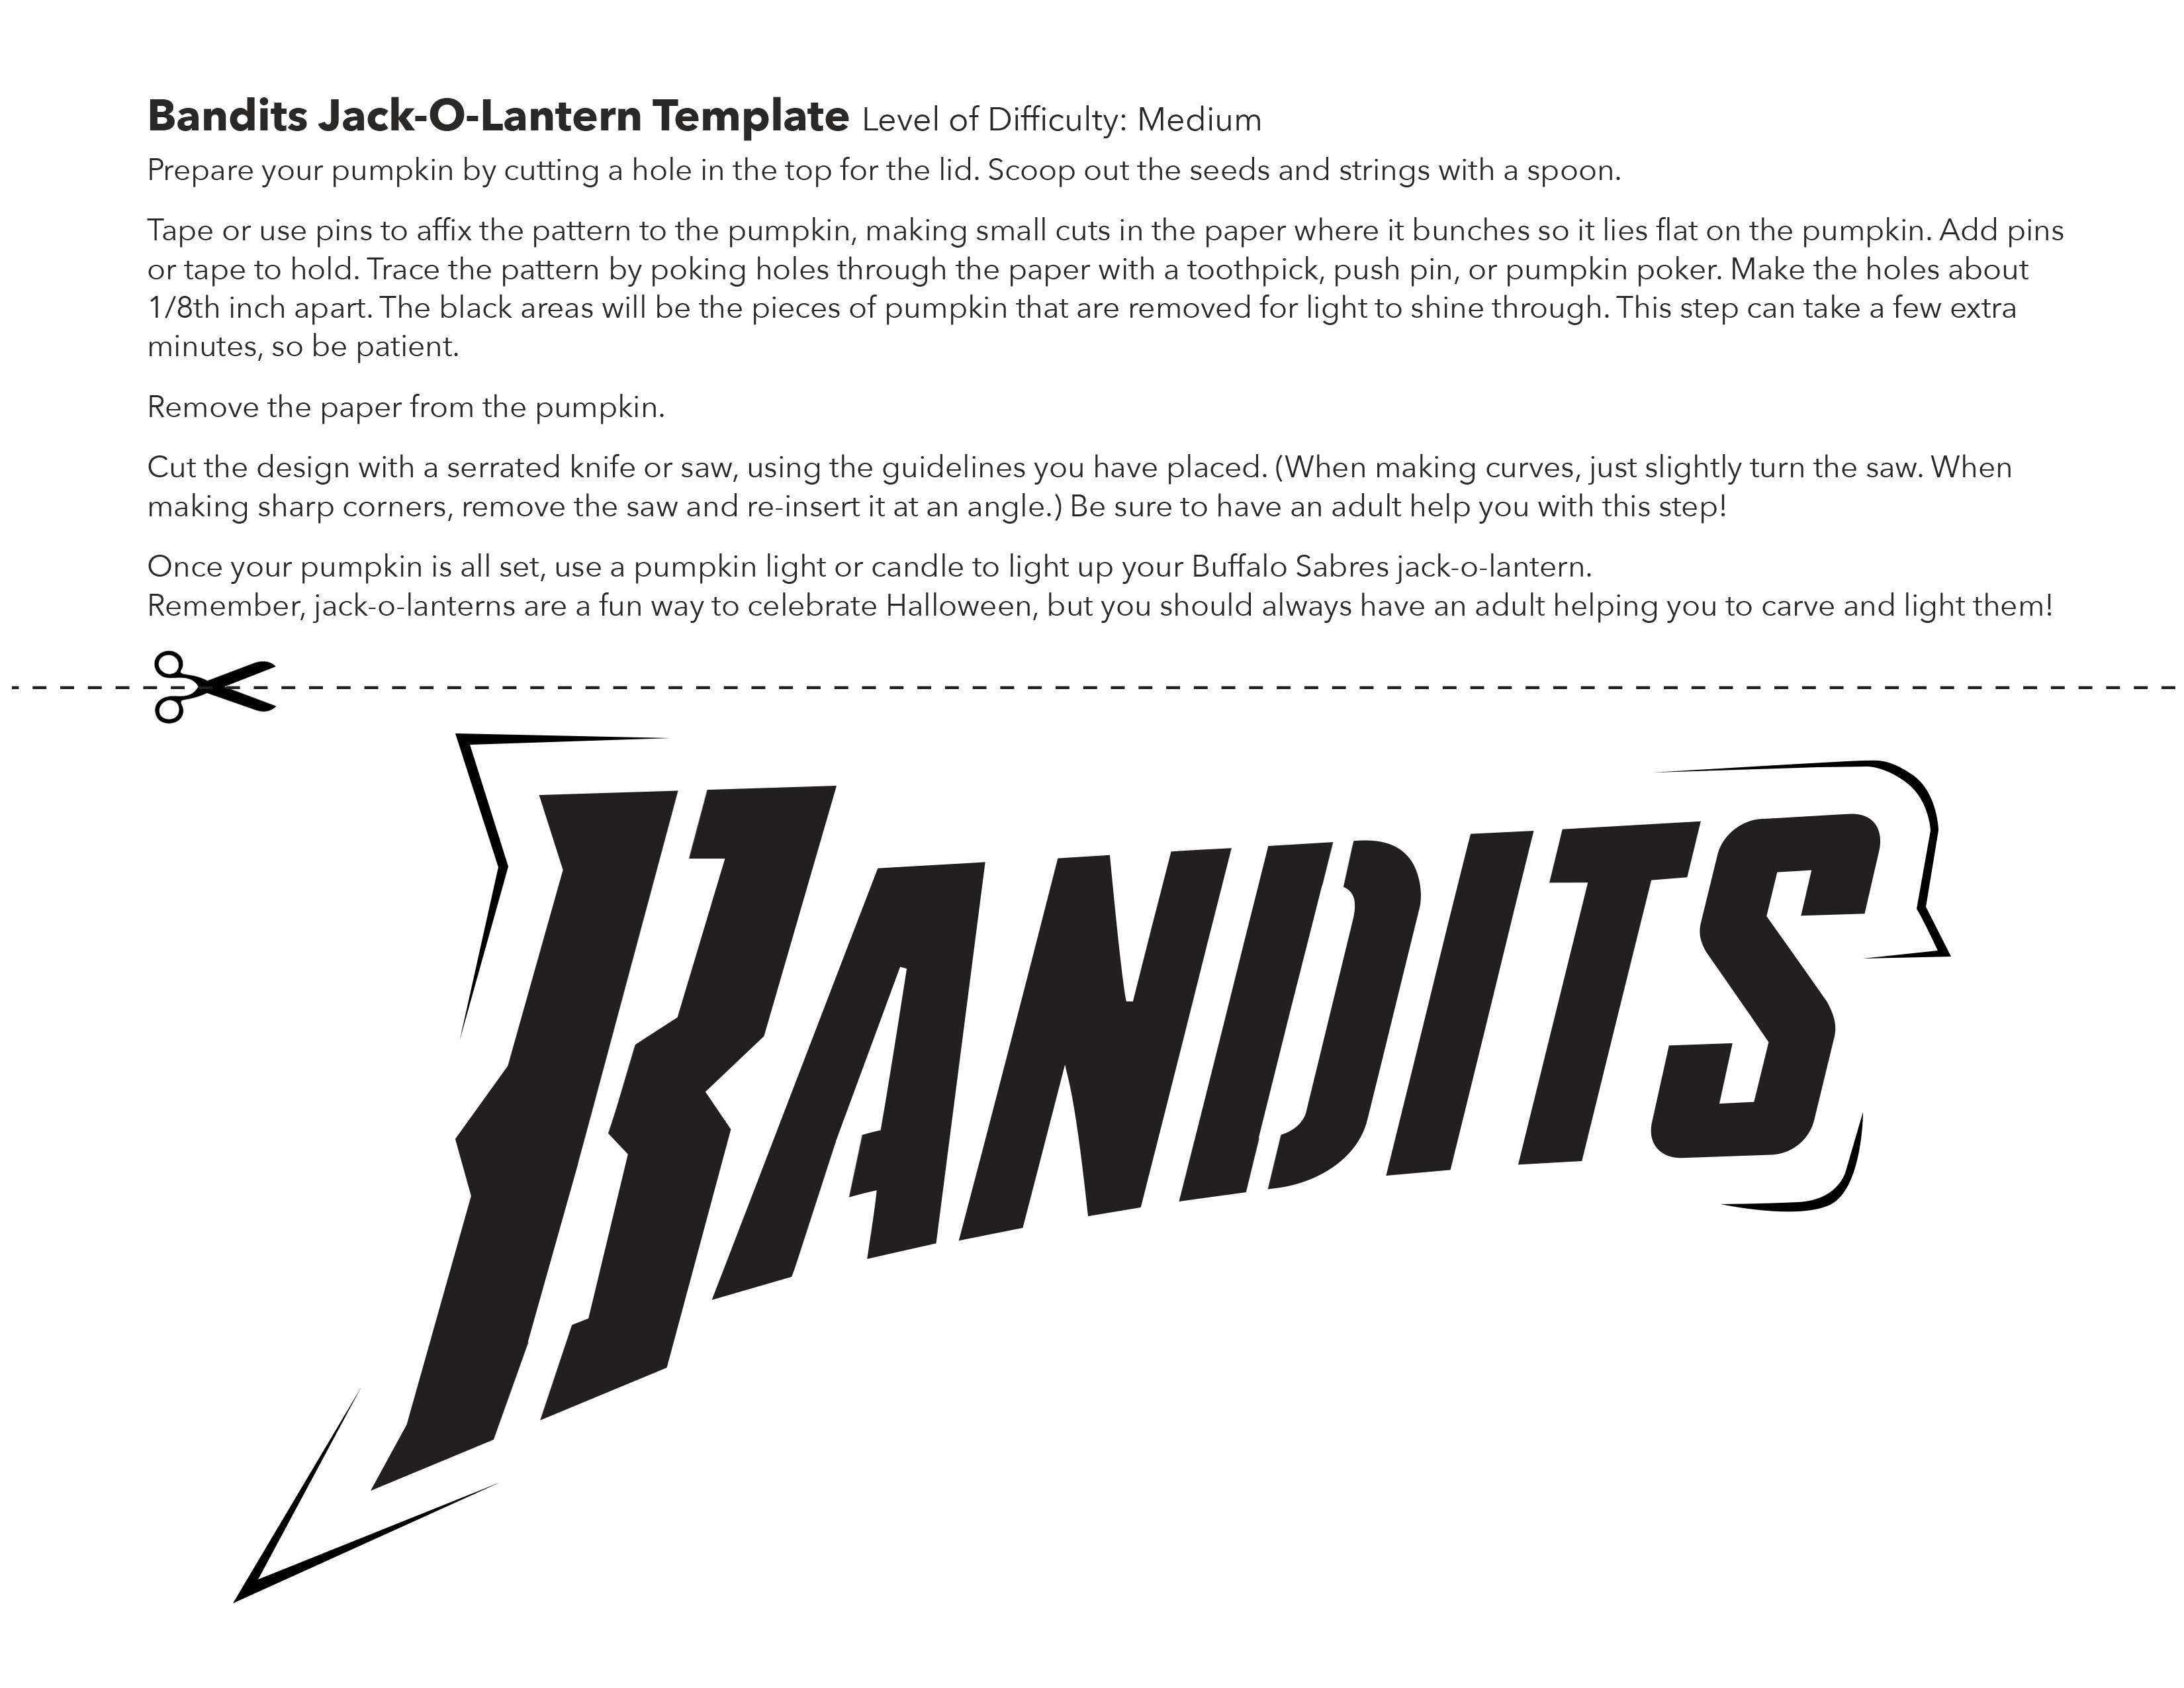 Bandits Jack-O-Lantern 2